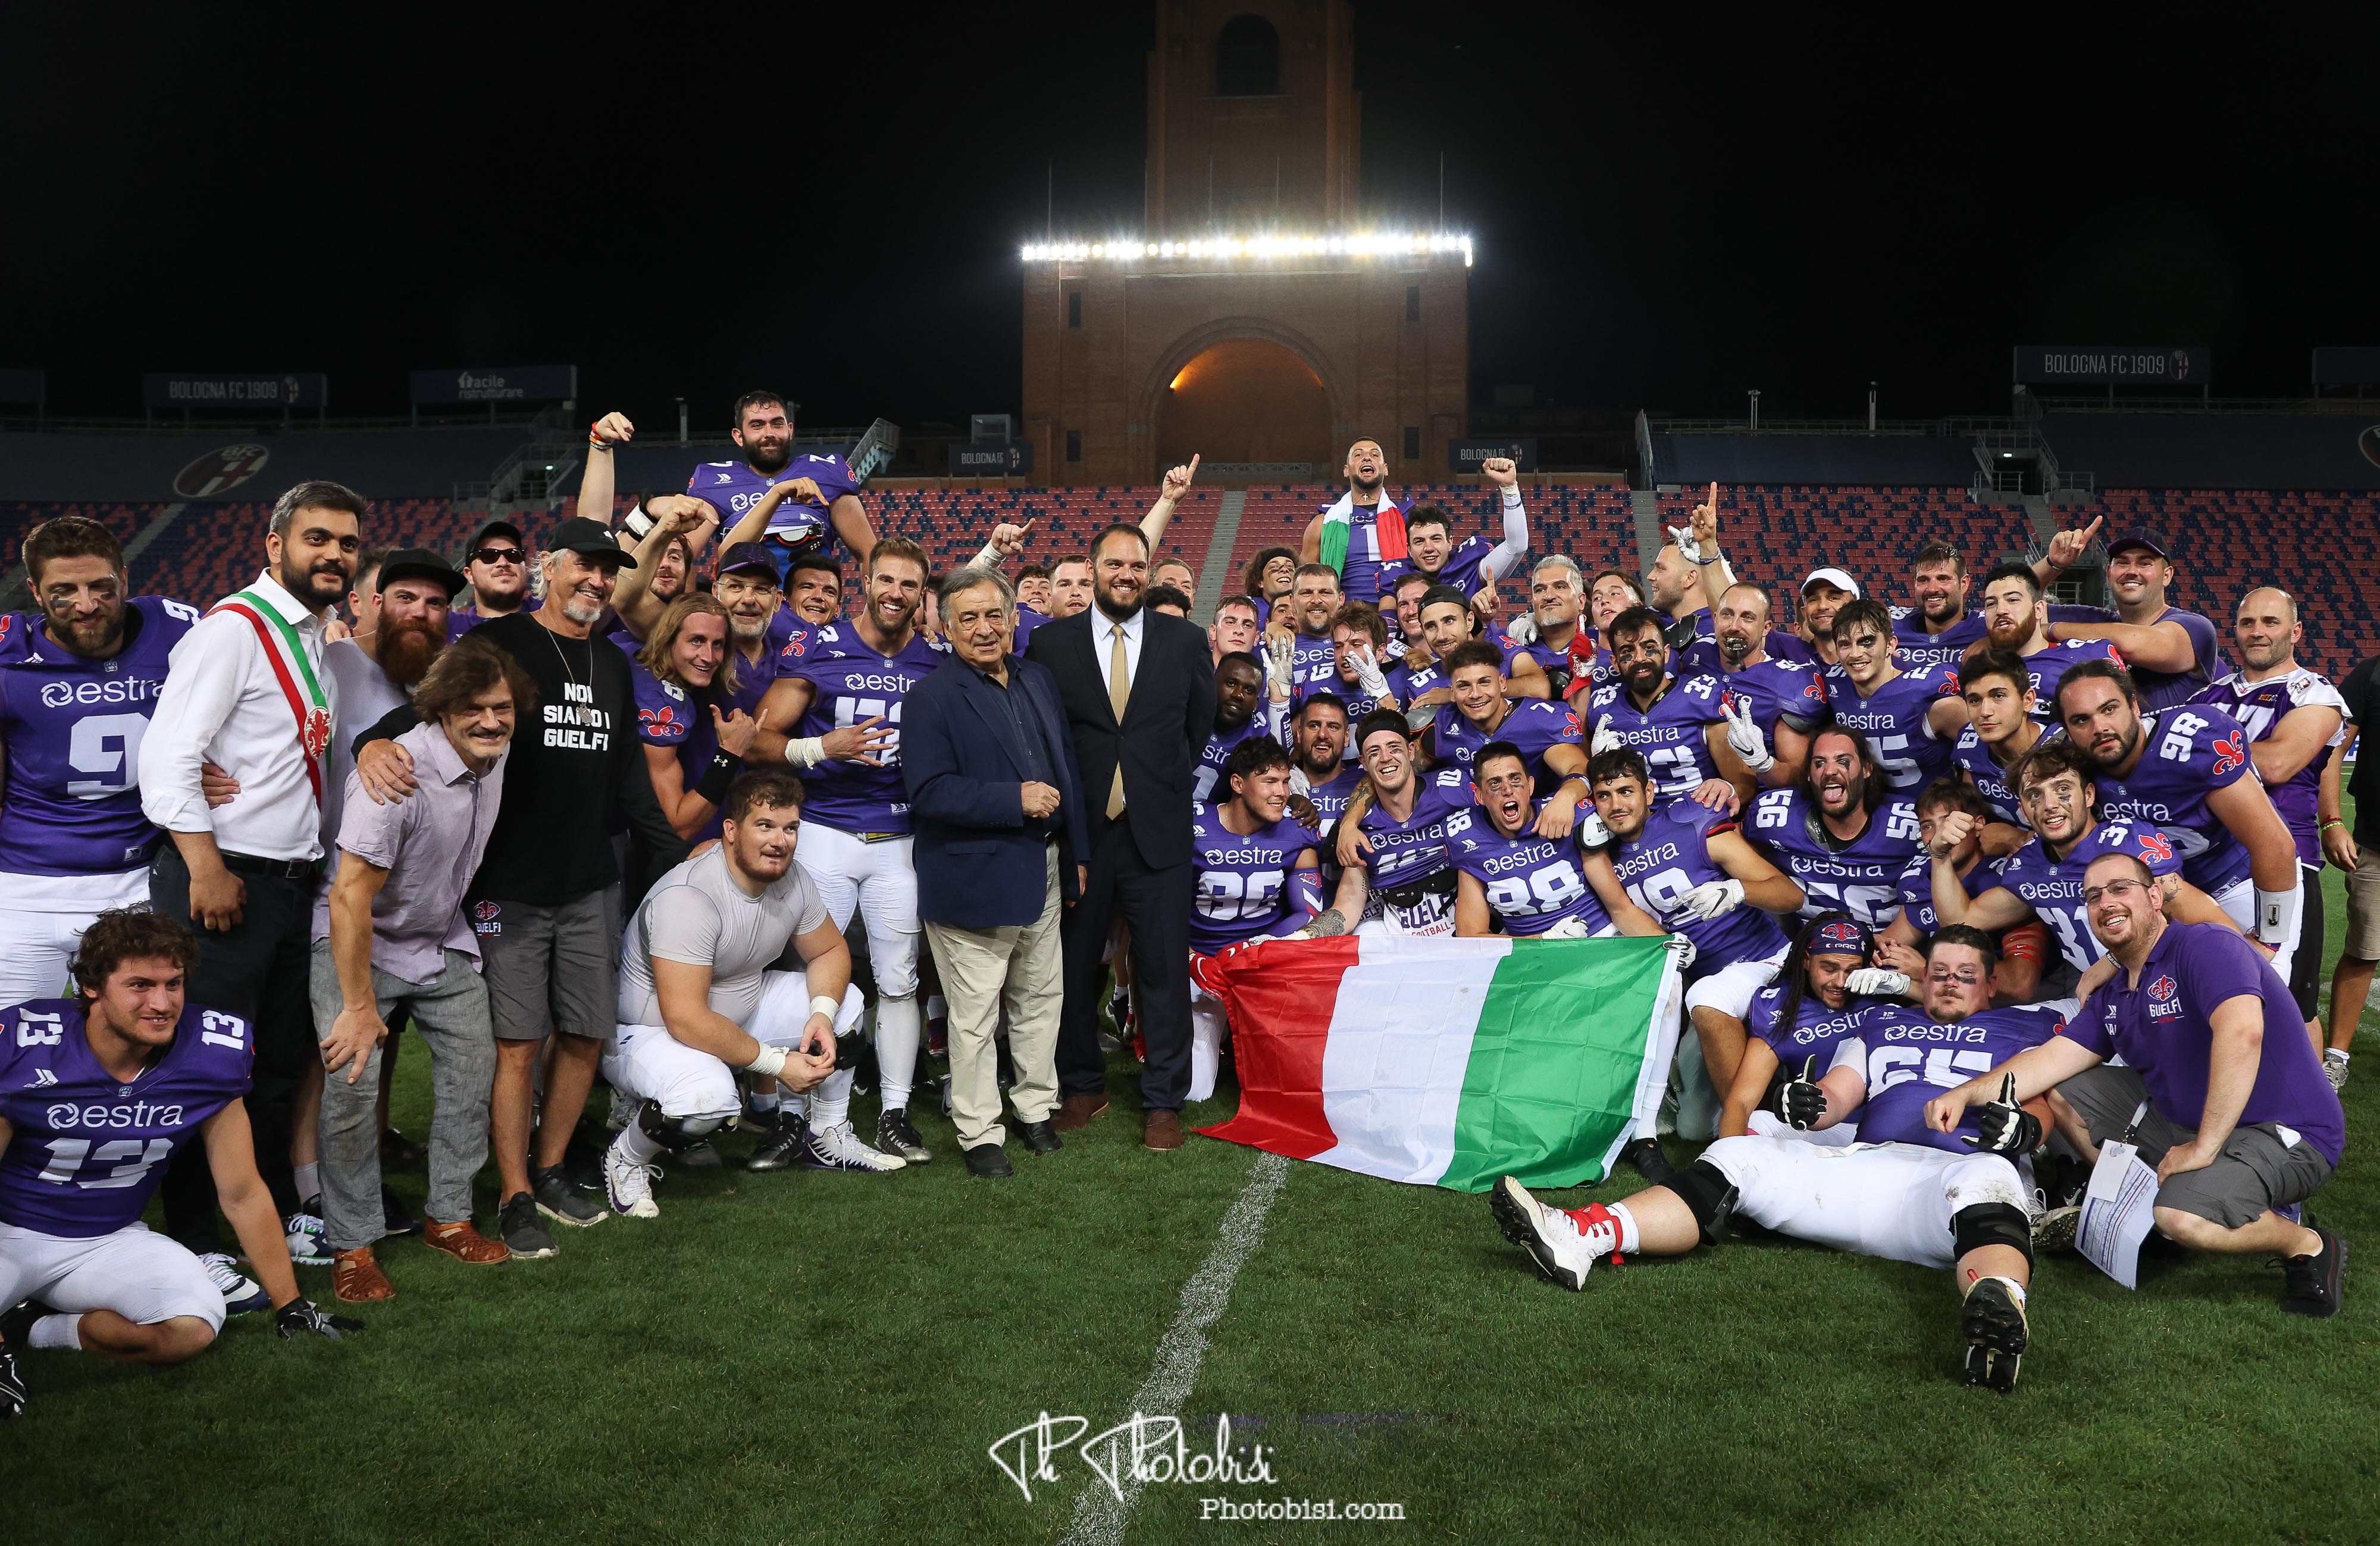 Guelfi Firenze are Italian “football” champions of the 41st Italian Bowl